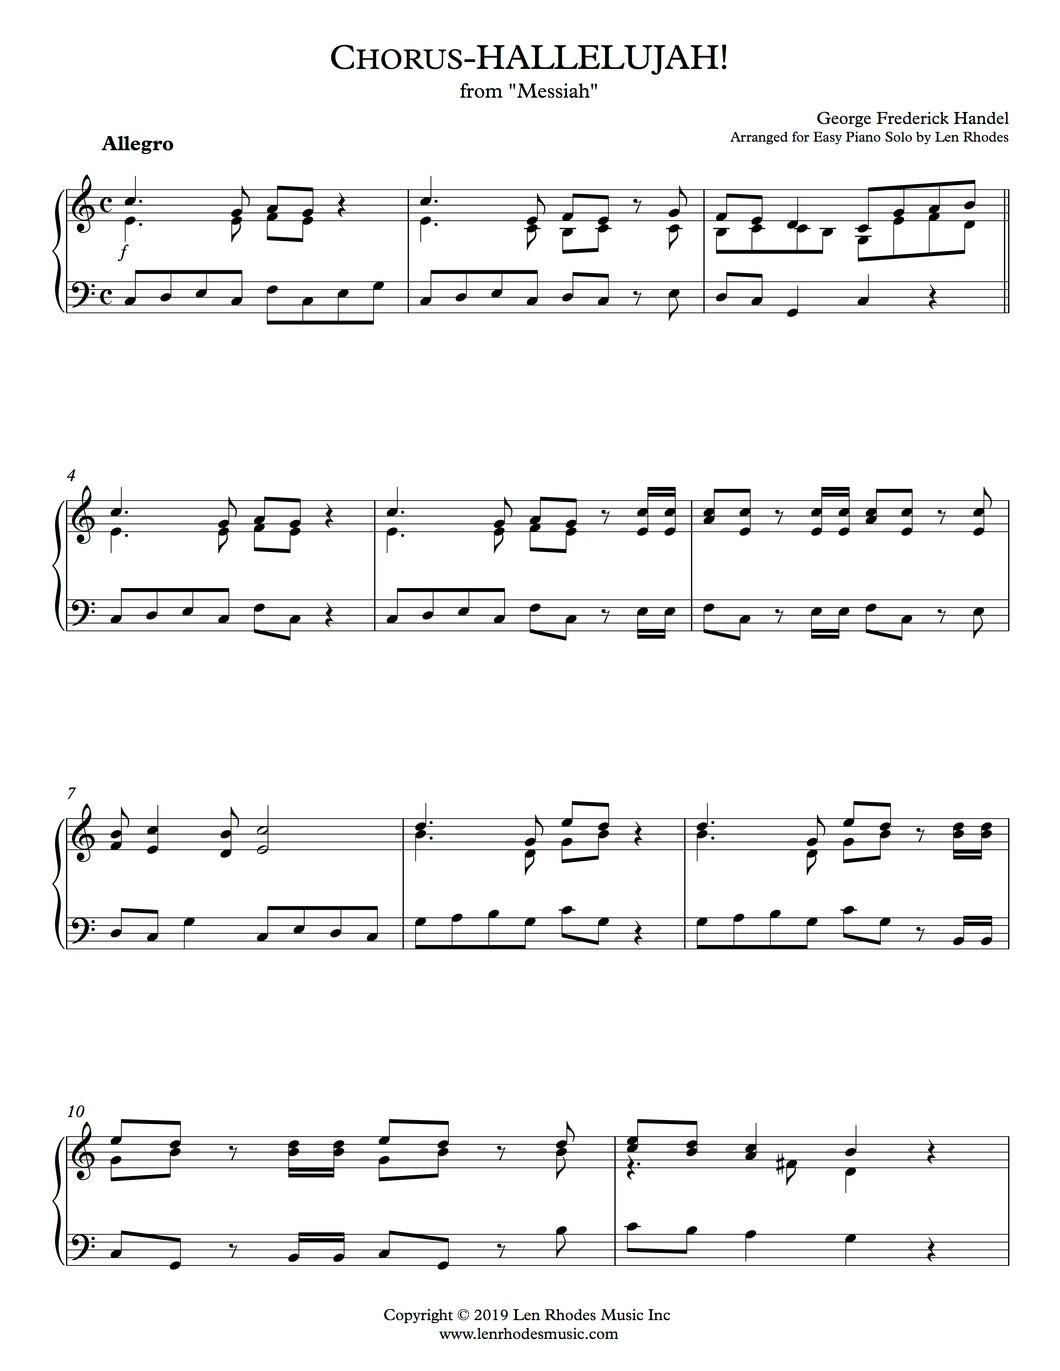 Hallelujah Chorus, Handel - intermediate Piano